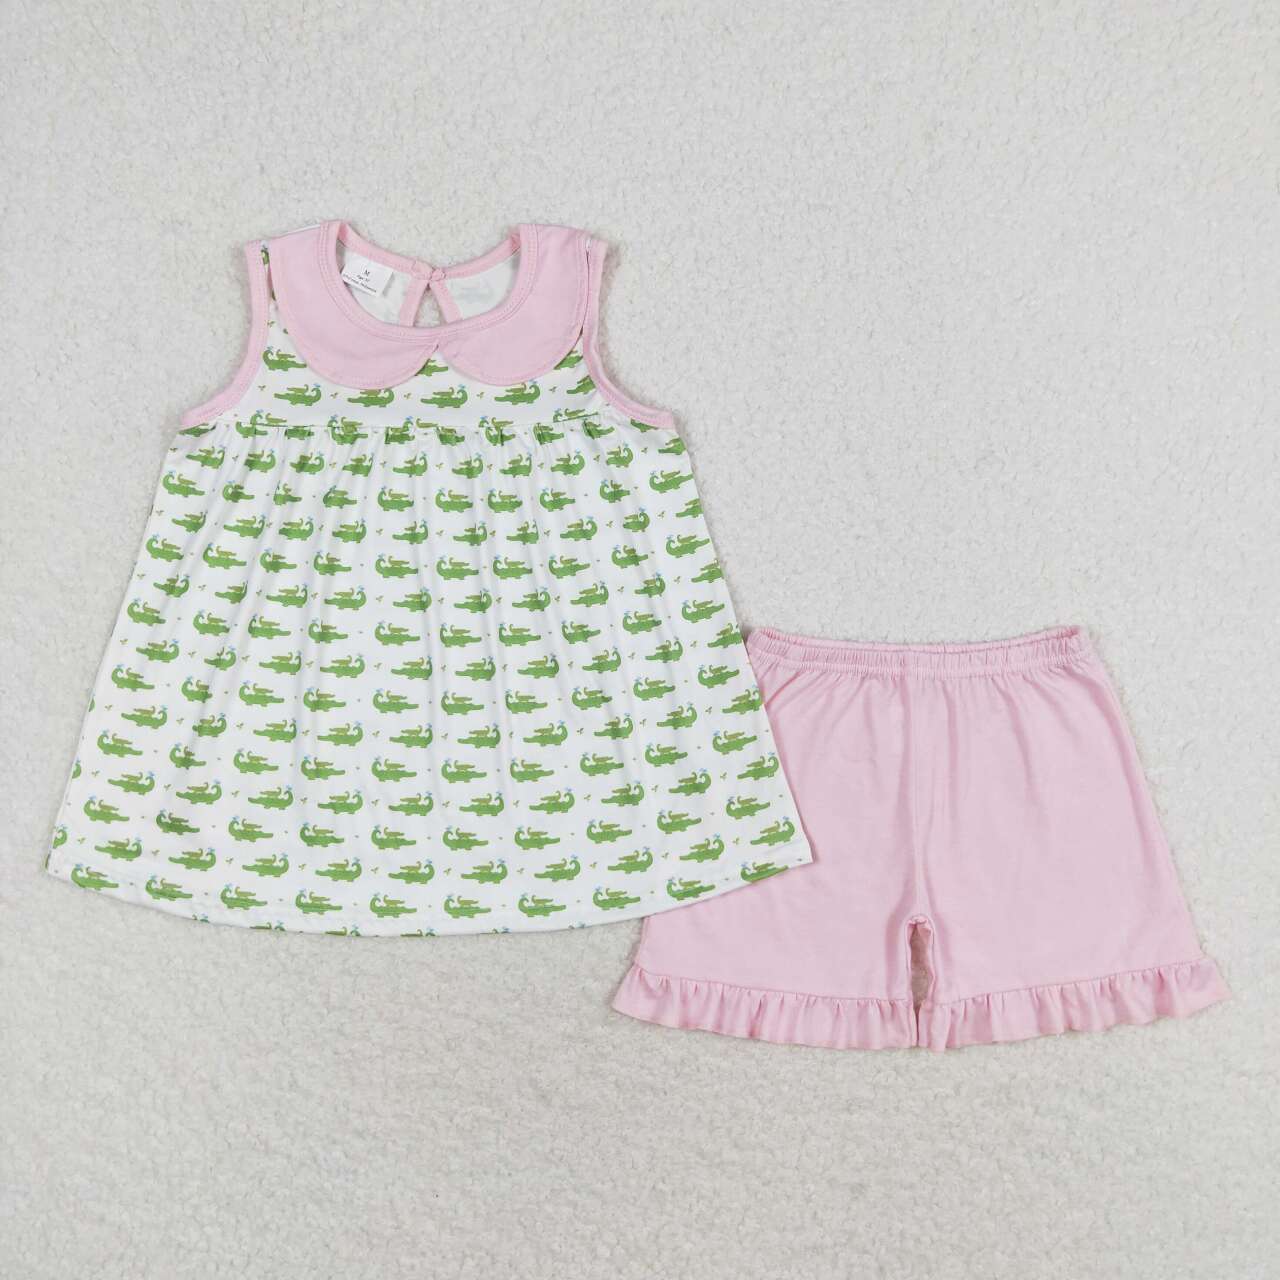 GSSO0654 Crocodile Print Top Pink Shorts Girls Summer Clothes Set